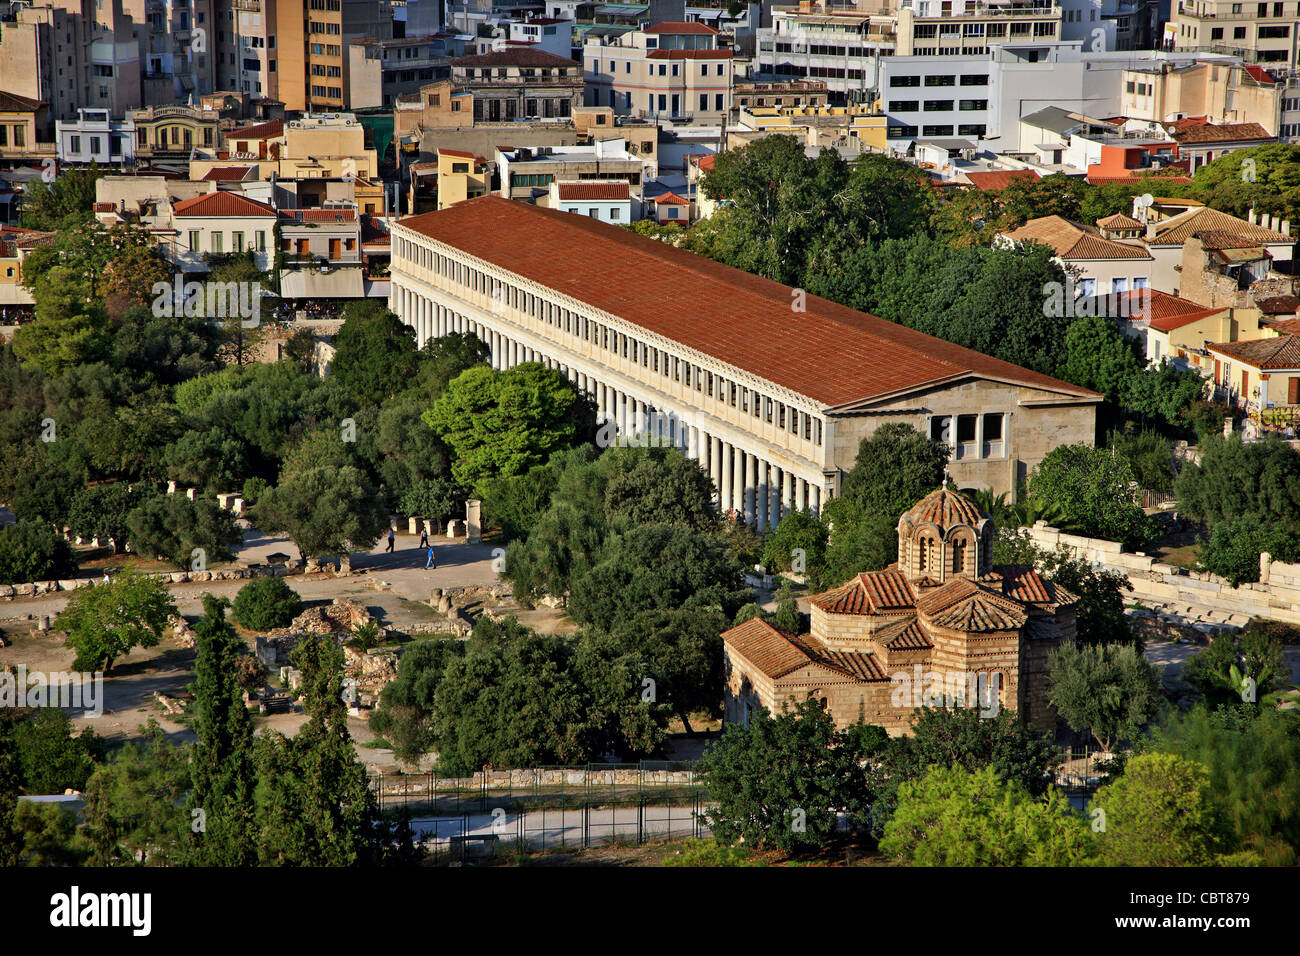 Panoramica, vista parziale di gran parte dell'Antica Agorà di Atene, Grecia Foto Stock